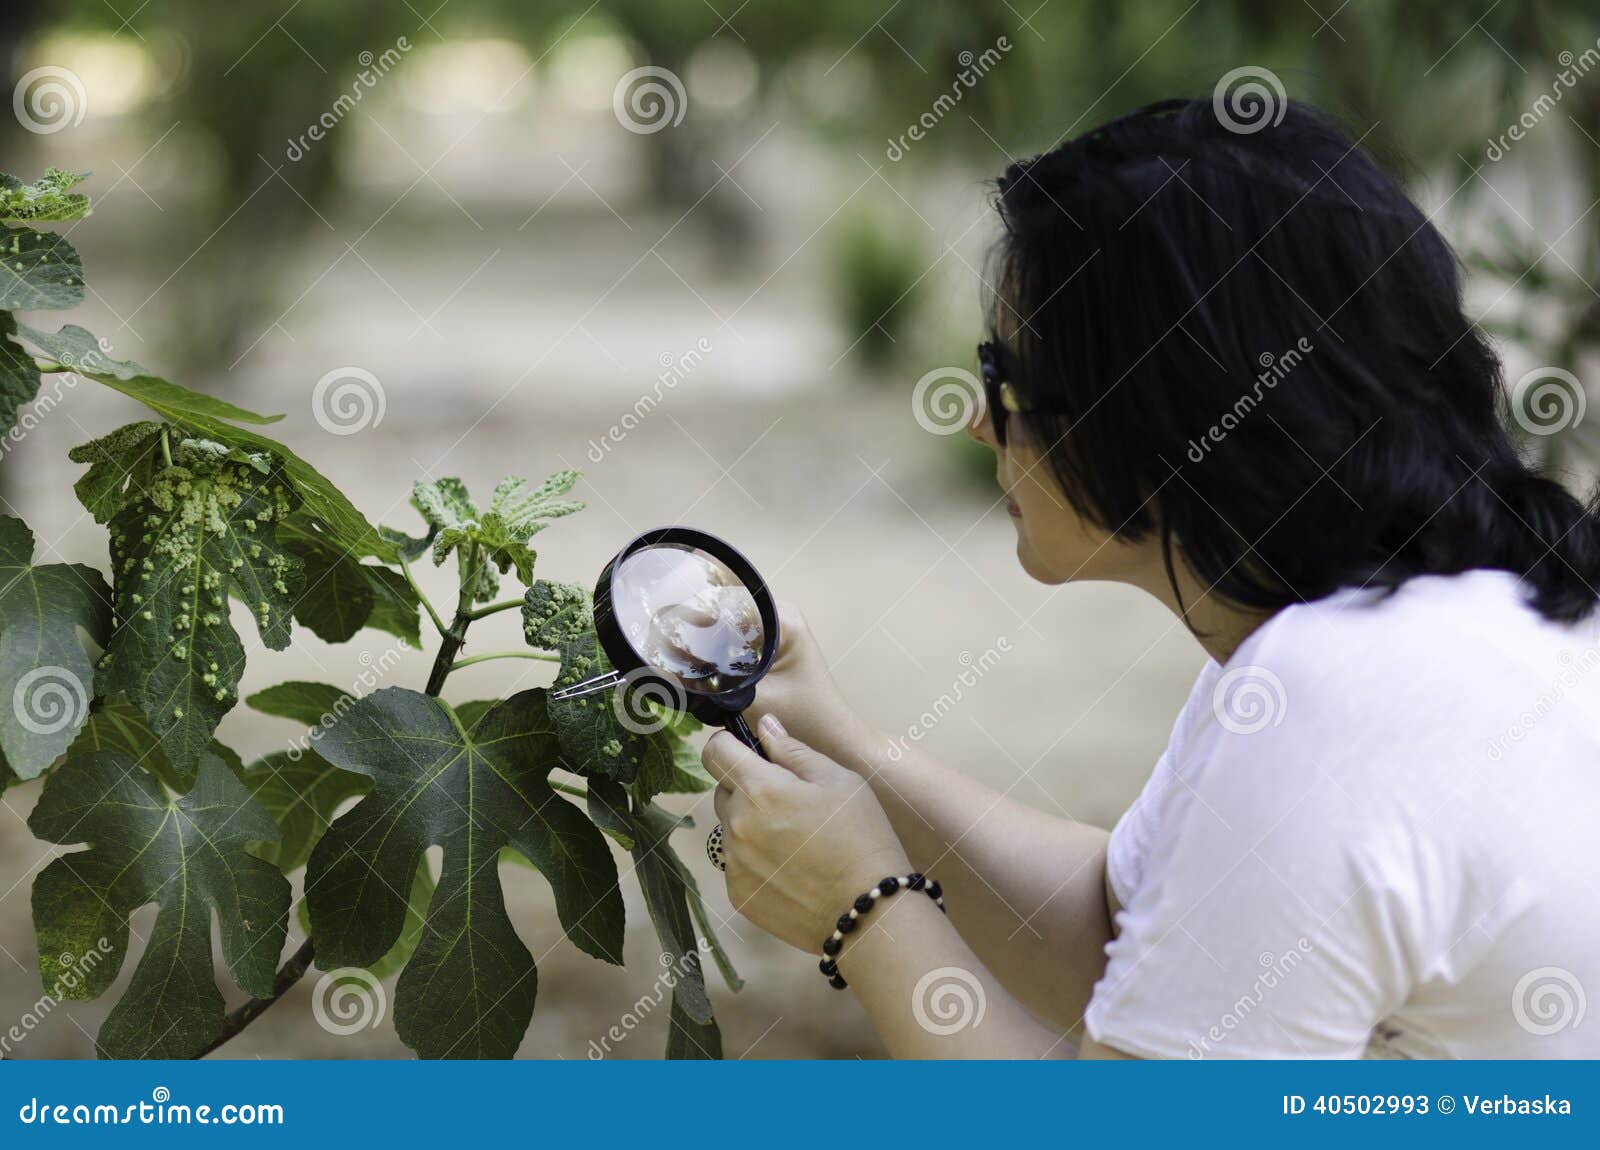 botanist finding leaf galls on the figs tree